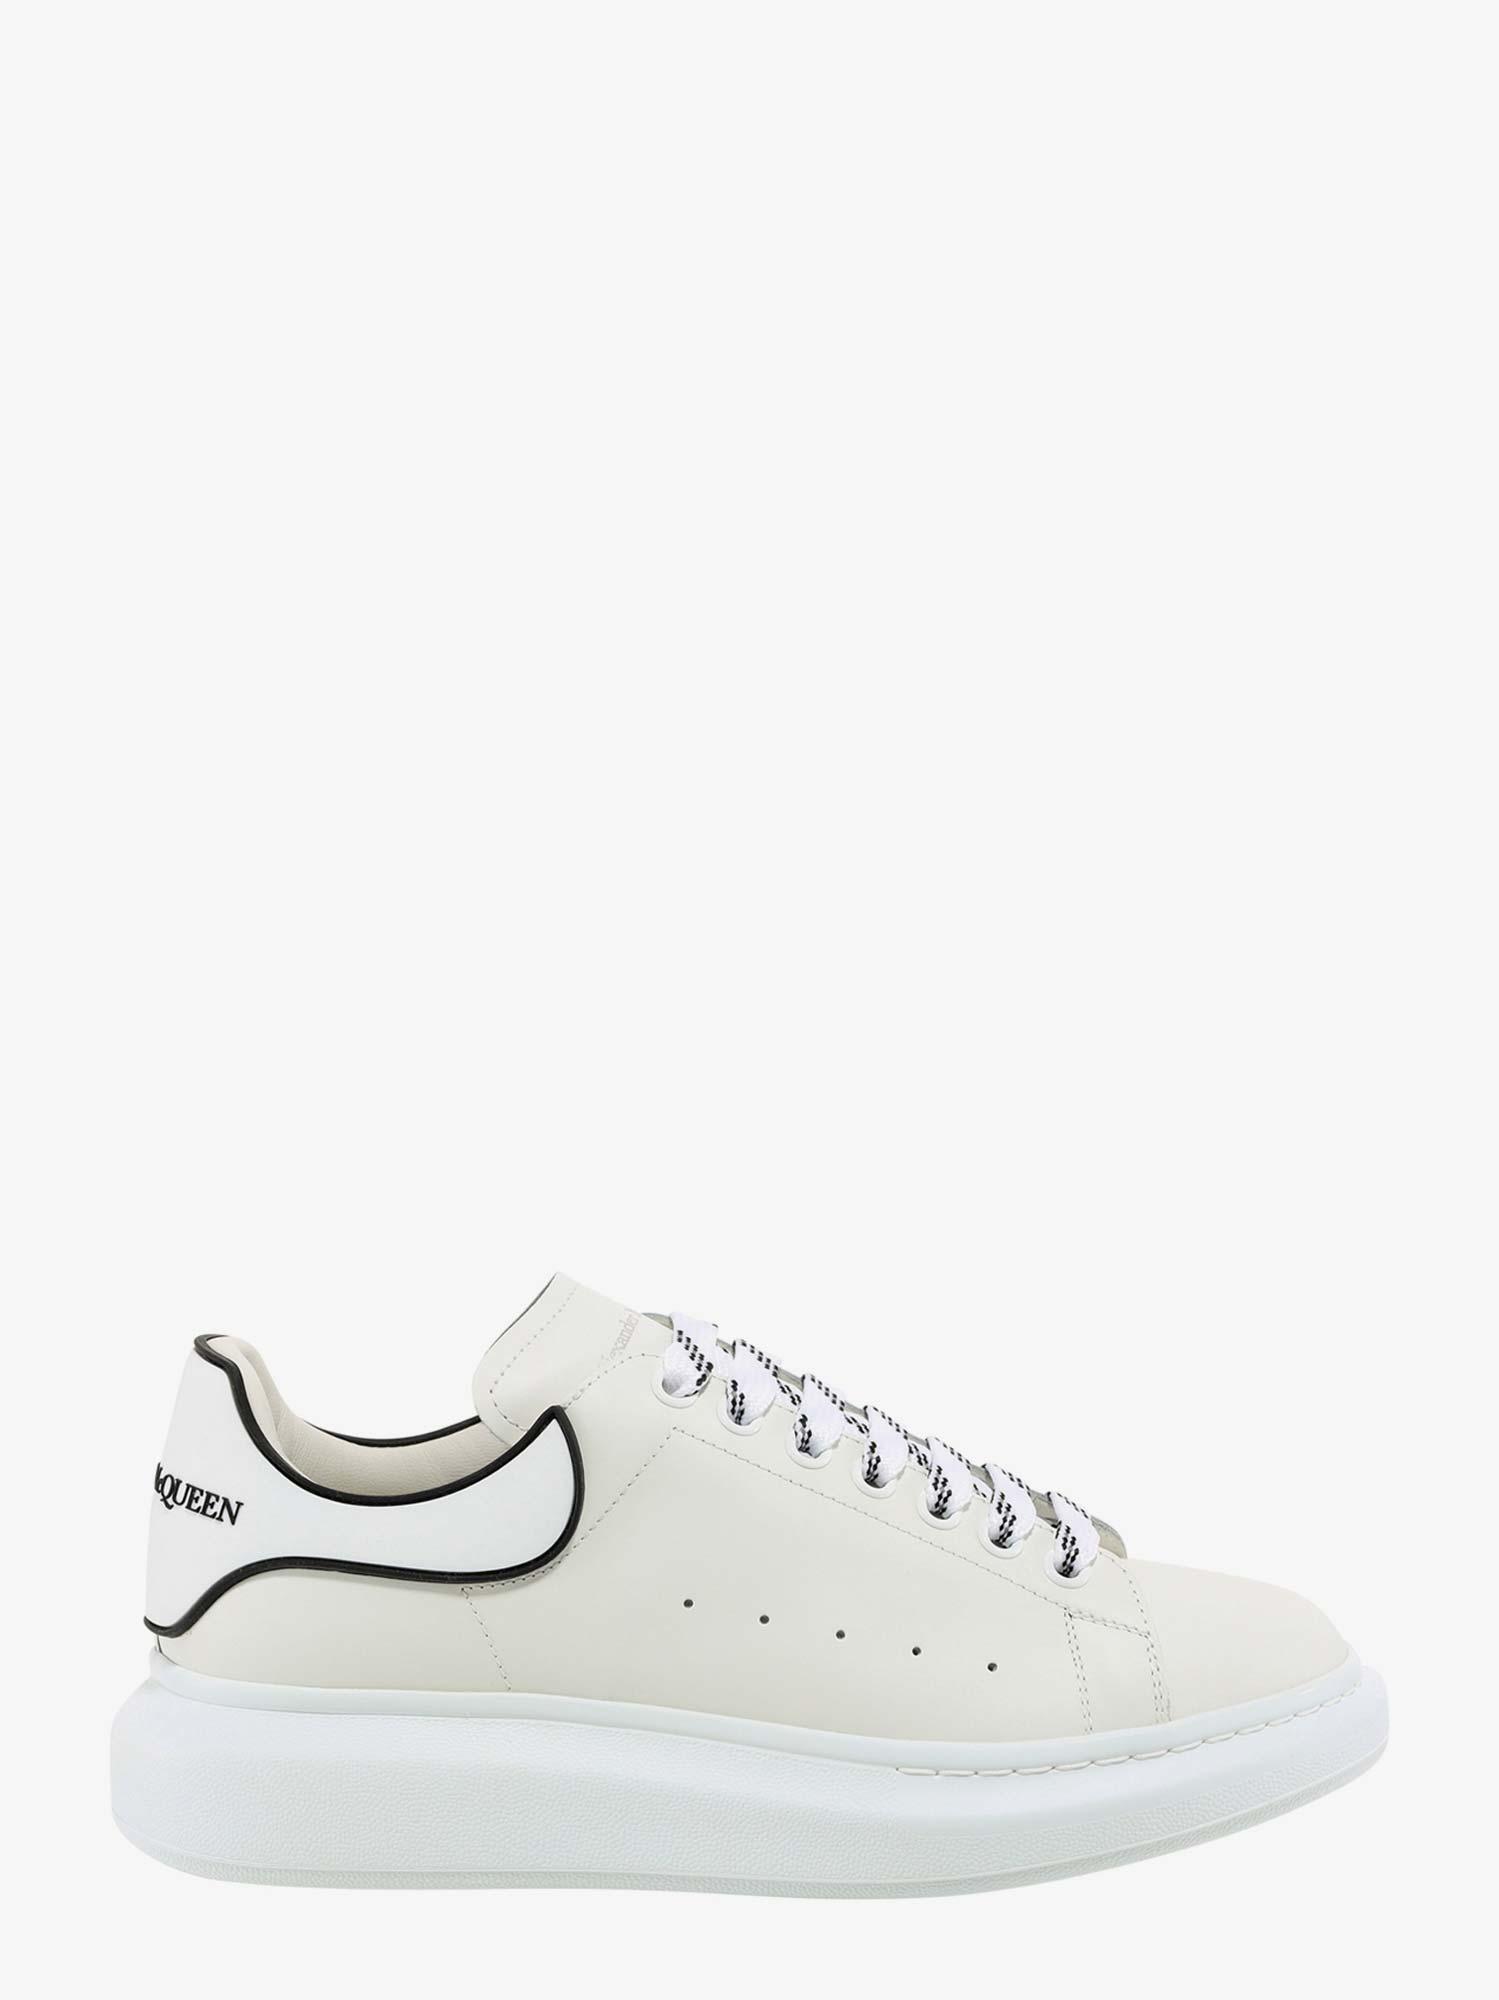 Alexander McQueen Larry Leather Sneakers in White for Men | Lyst